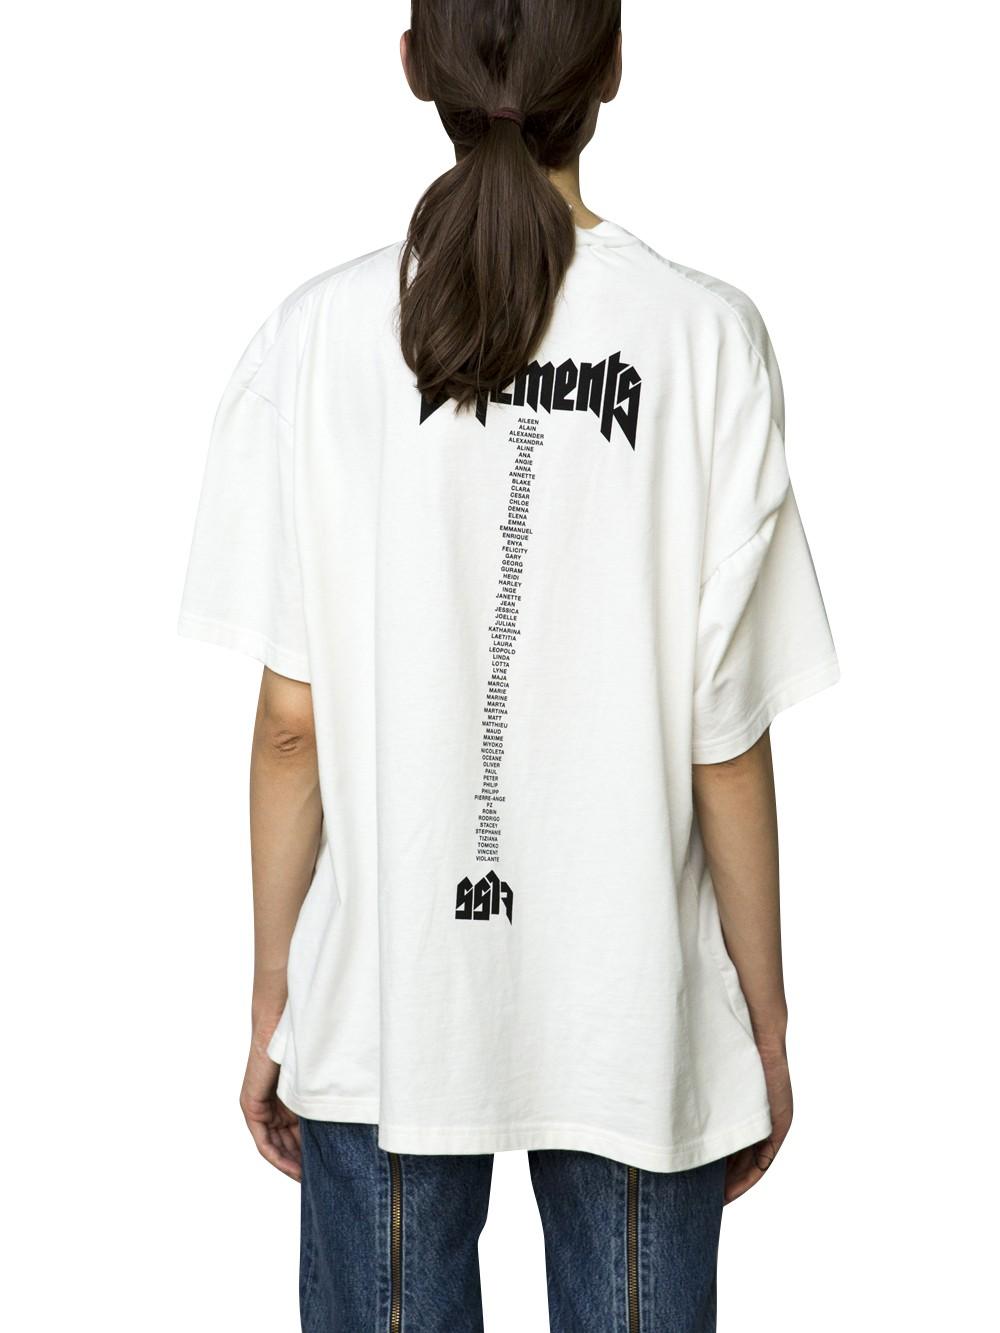 Lyst - Vetements X Hanes 'staff' T-shirt in White